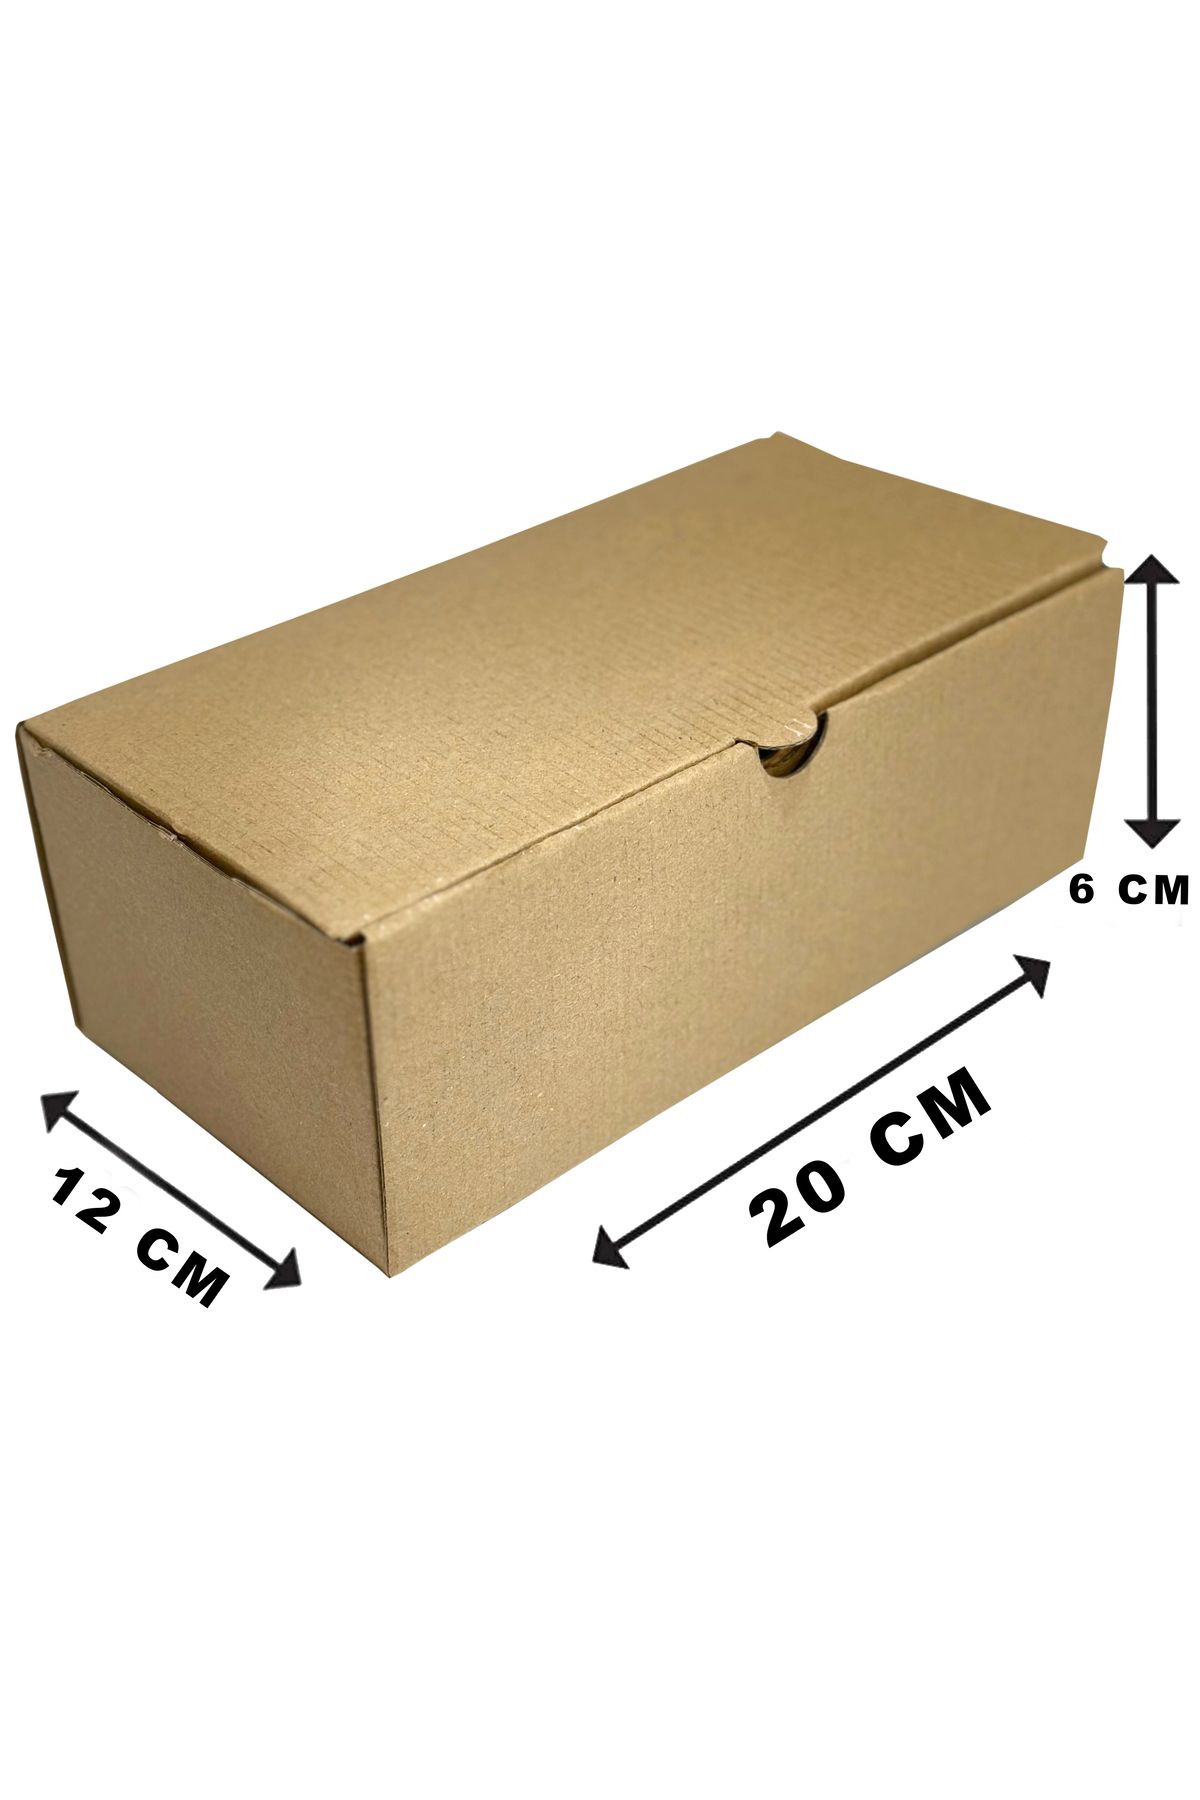 Mondi Paketleme Kargo Taşıma Kutusu 12x20x6 Cm 10 Adet